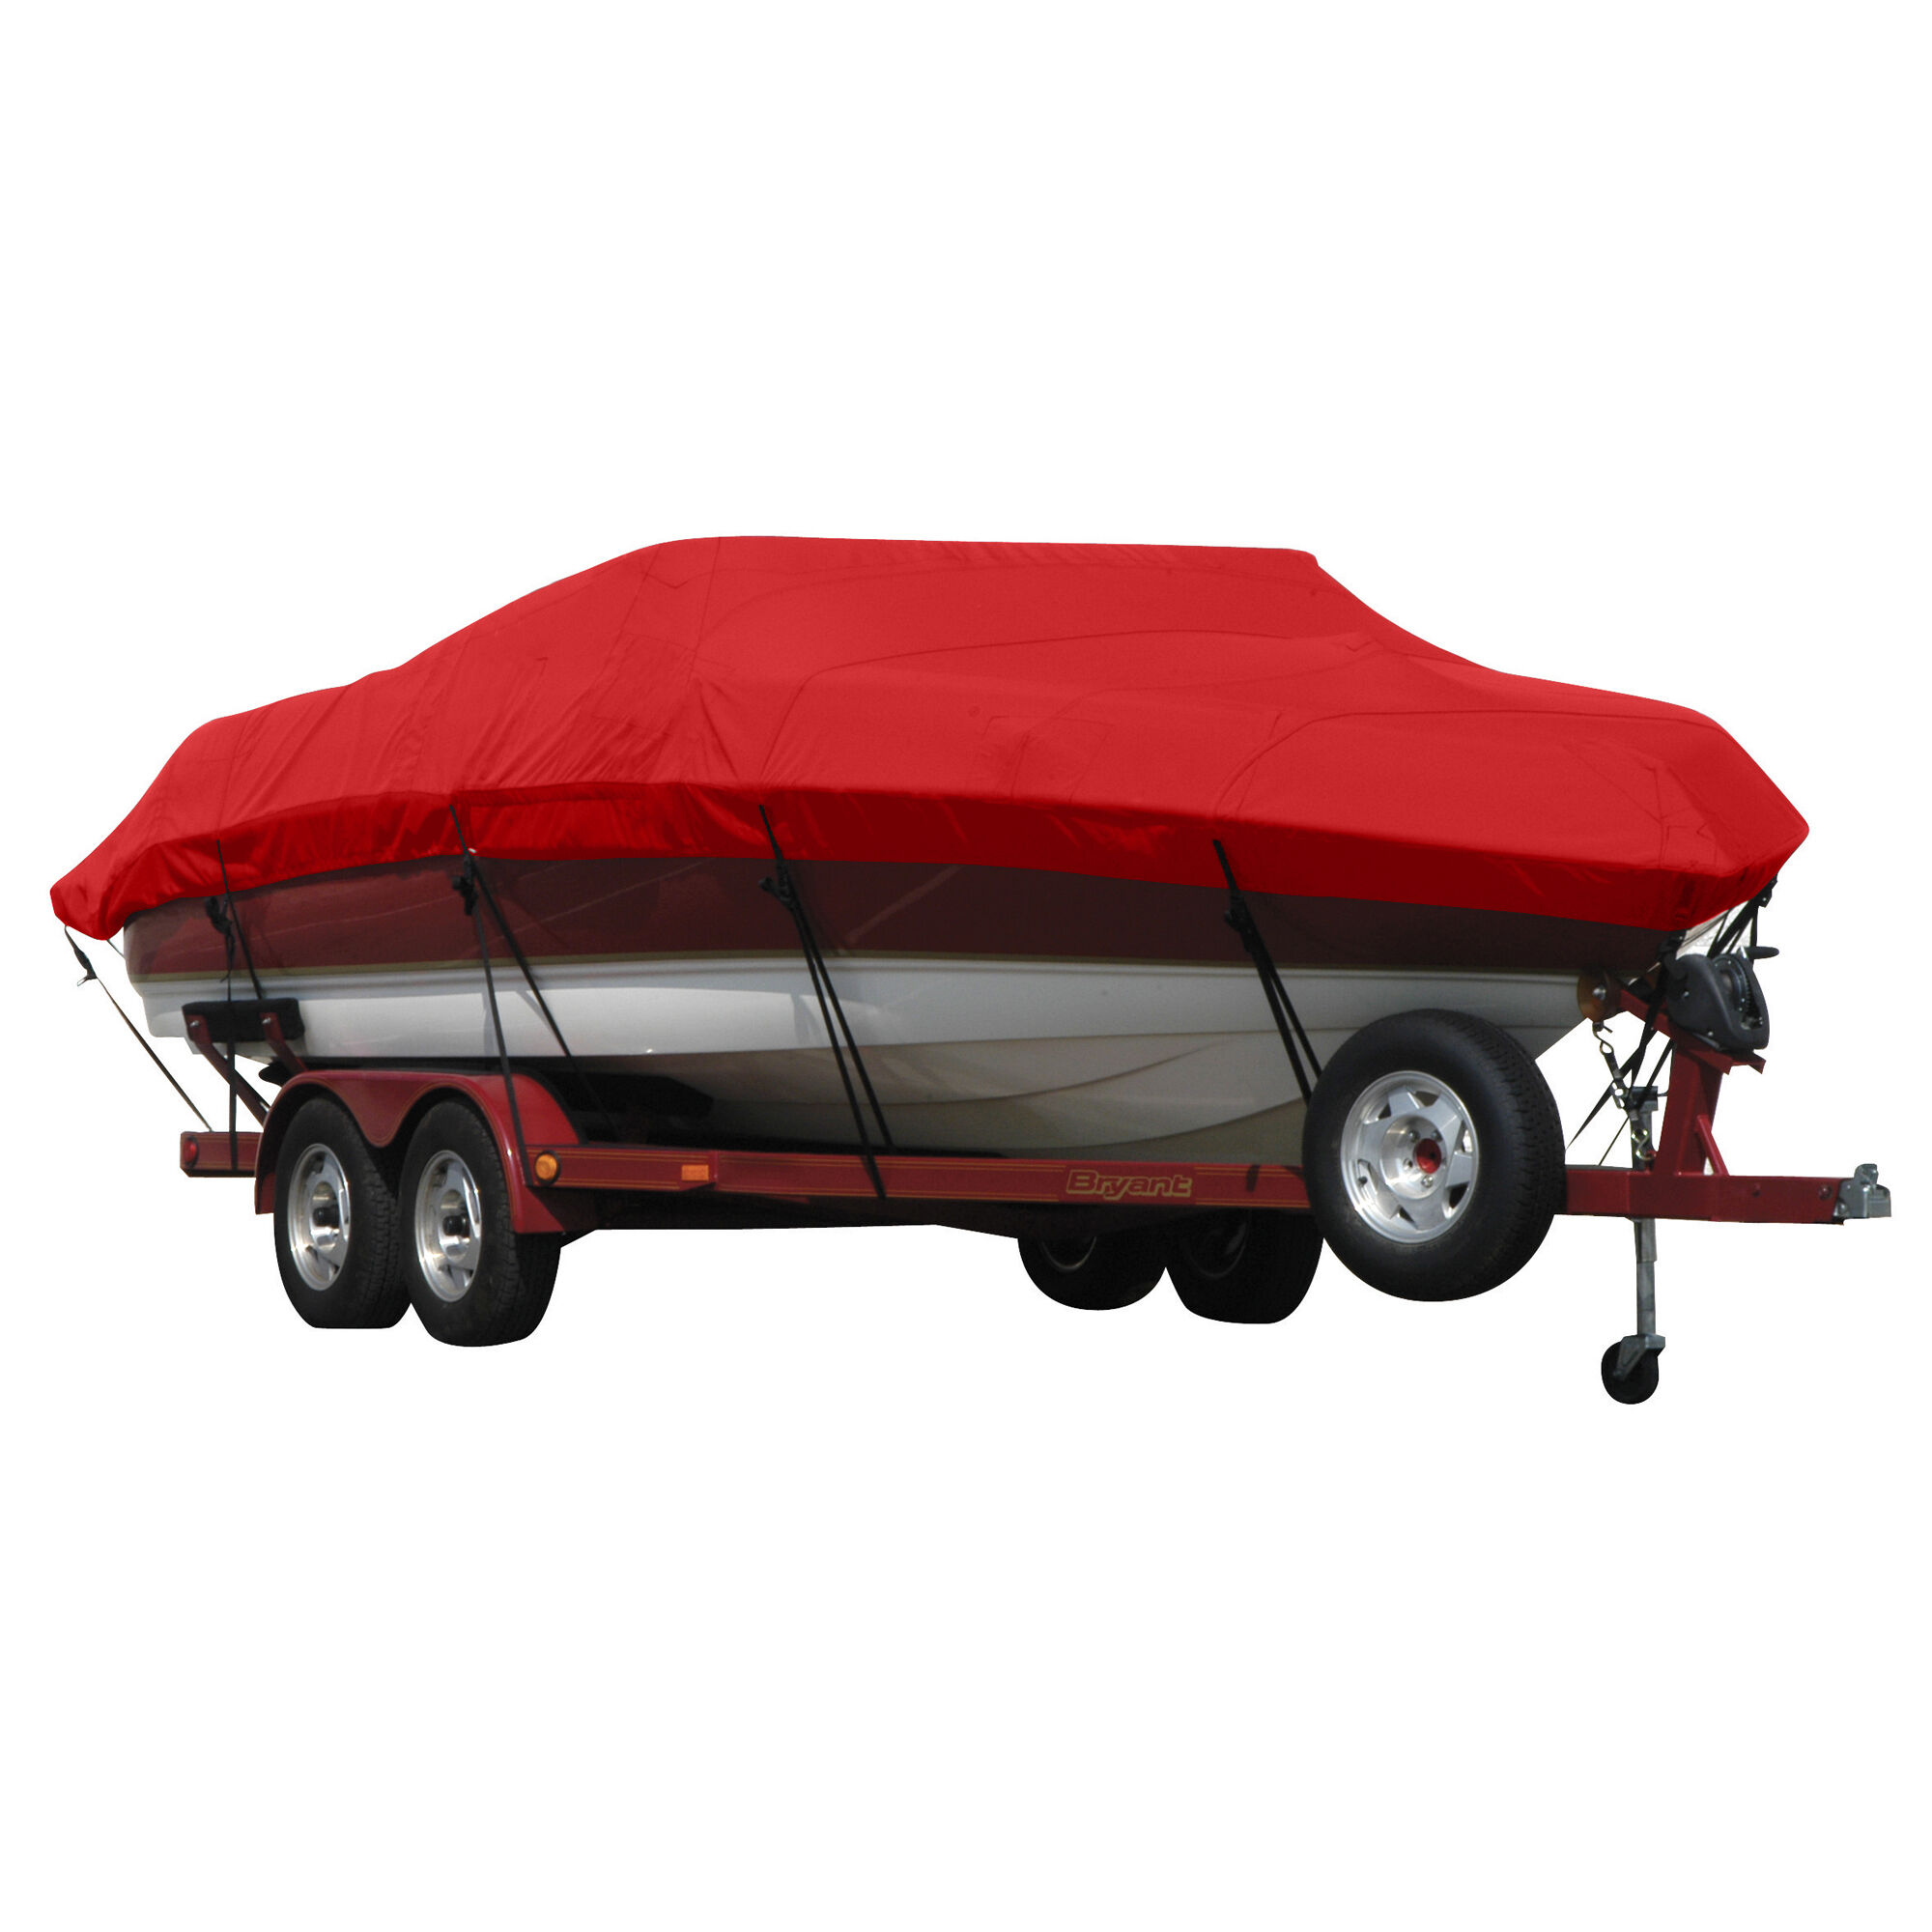 Covermate Exact Fit Sunbrella Boat Cover for Seaswirl 190 Fs 190 Fish & Ski w/ Port Minnkota Trolling Motor w/ Extended Swim PLATFORMm I/O.